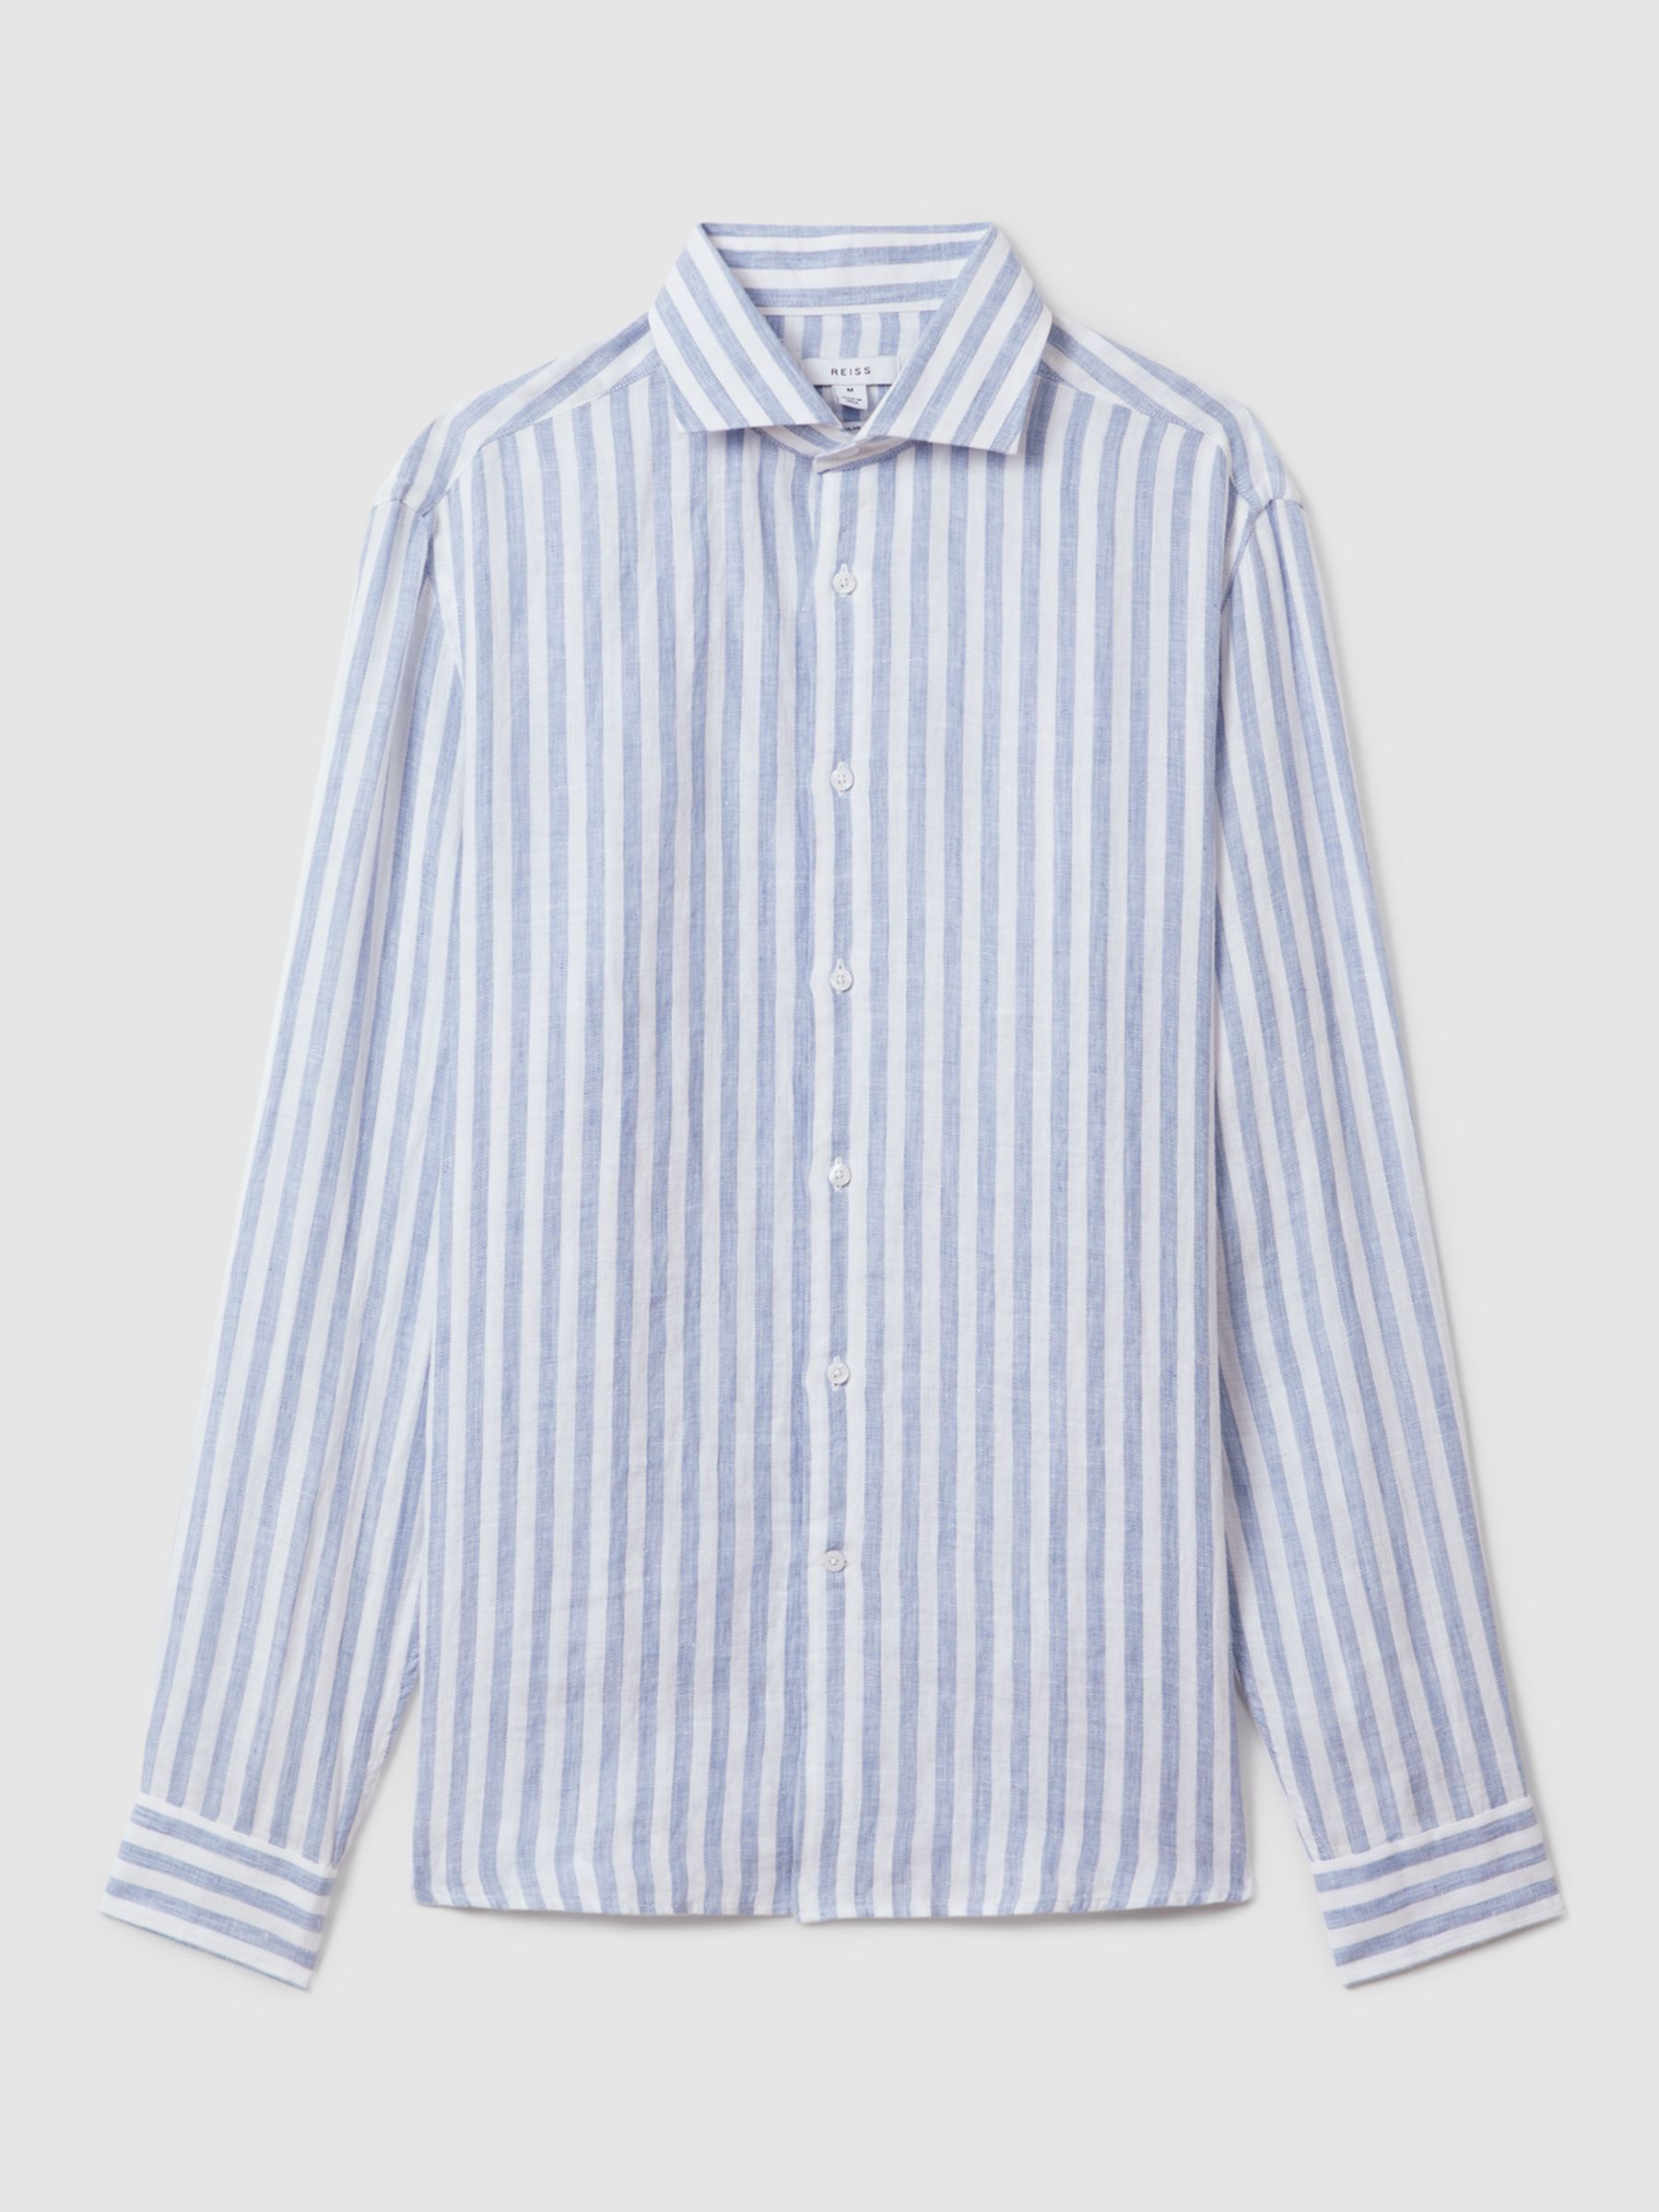 Reiss Ruban Long Sleeve Linen Stripe Shirt, Blue/White, XS